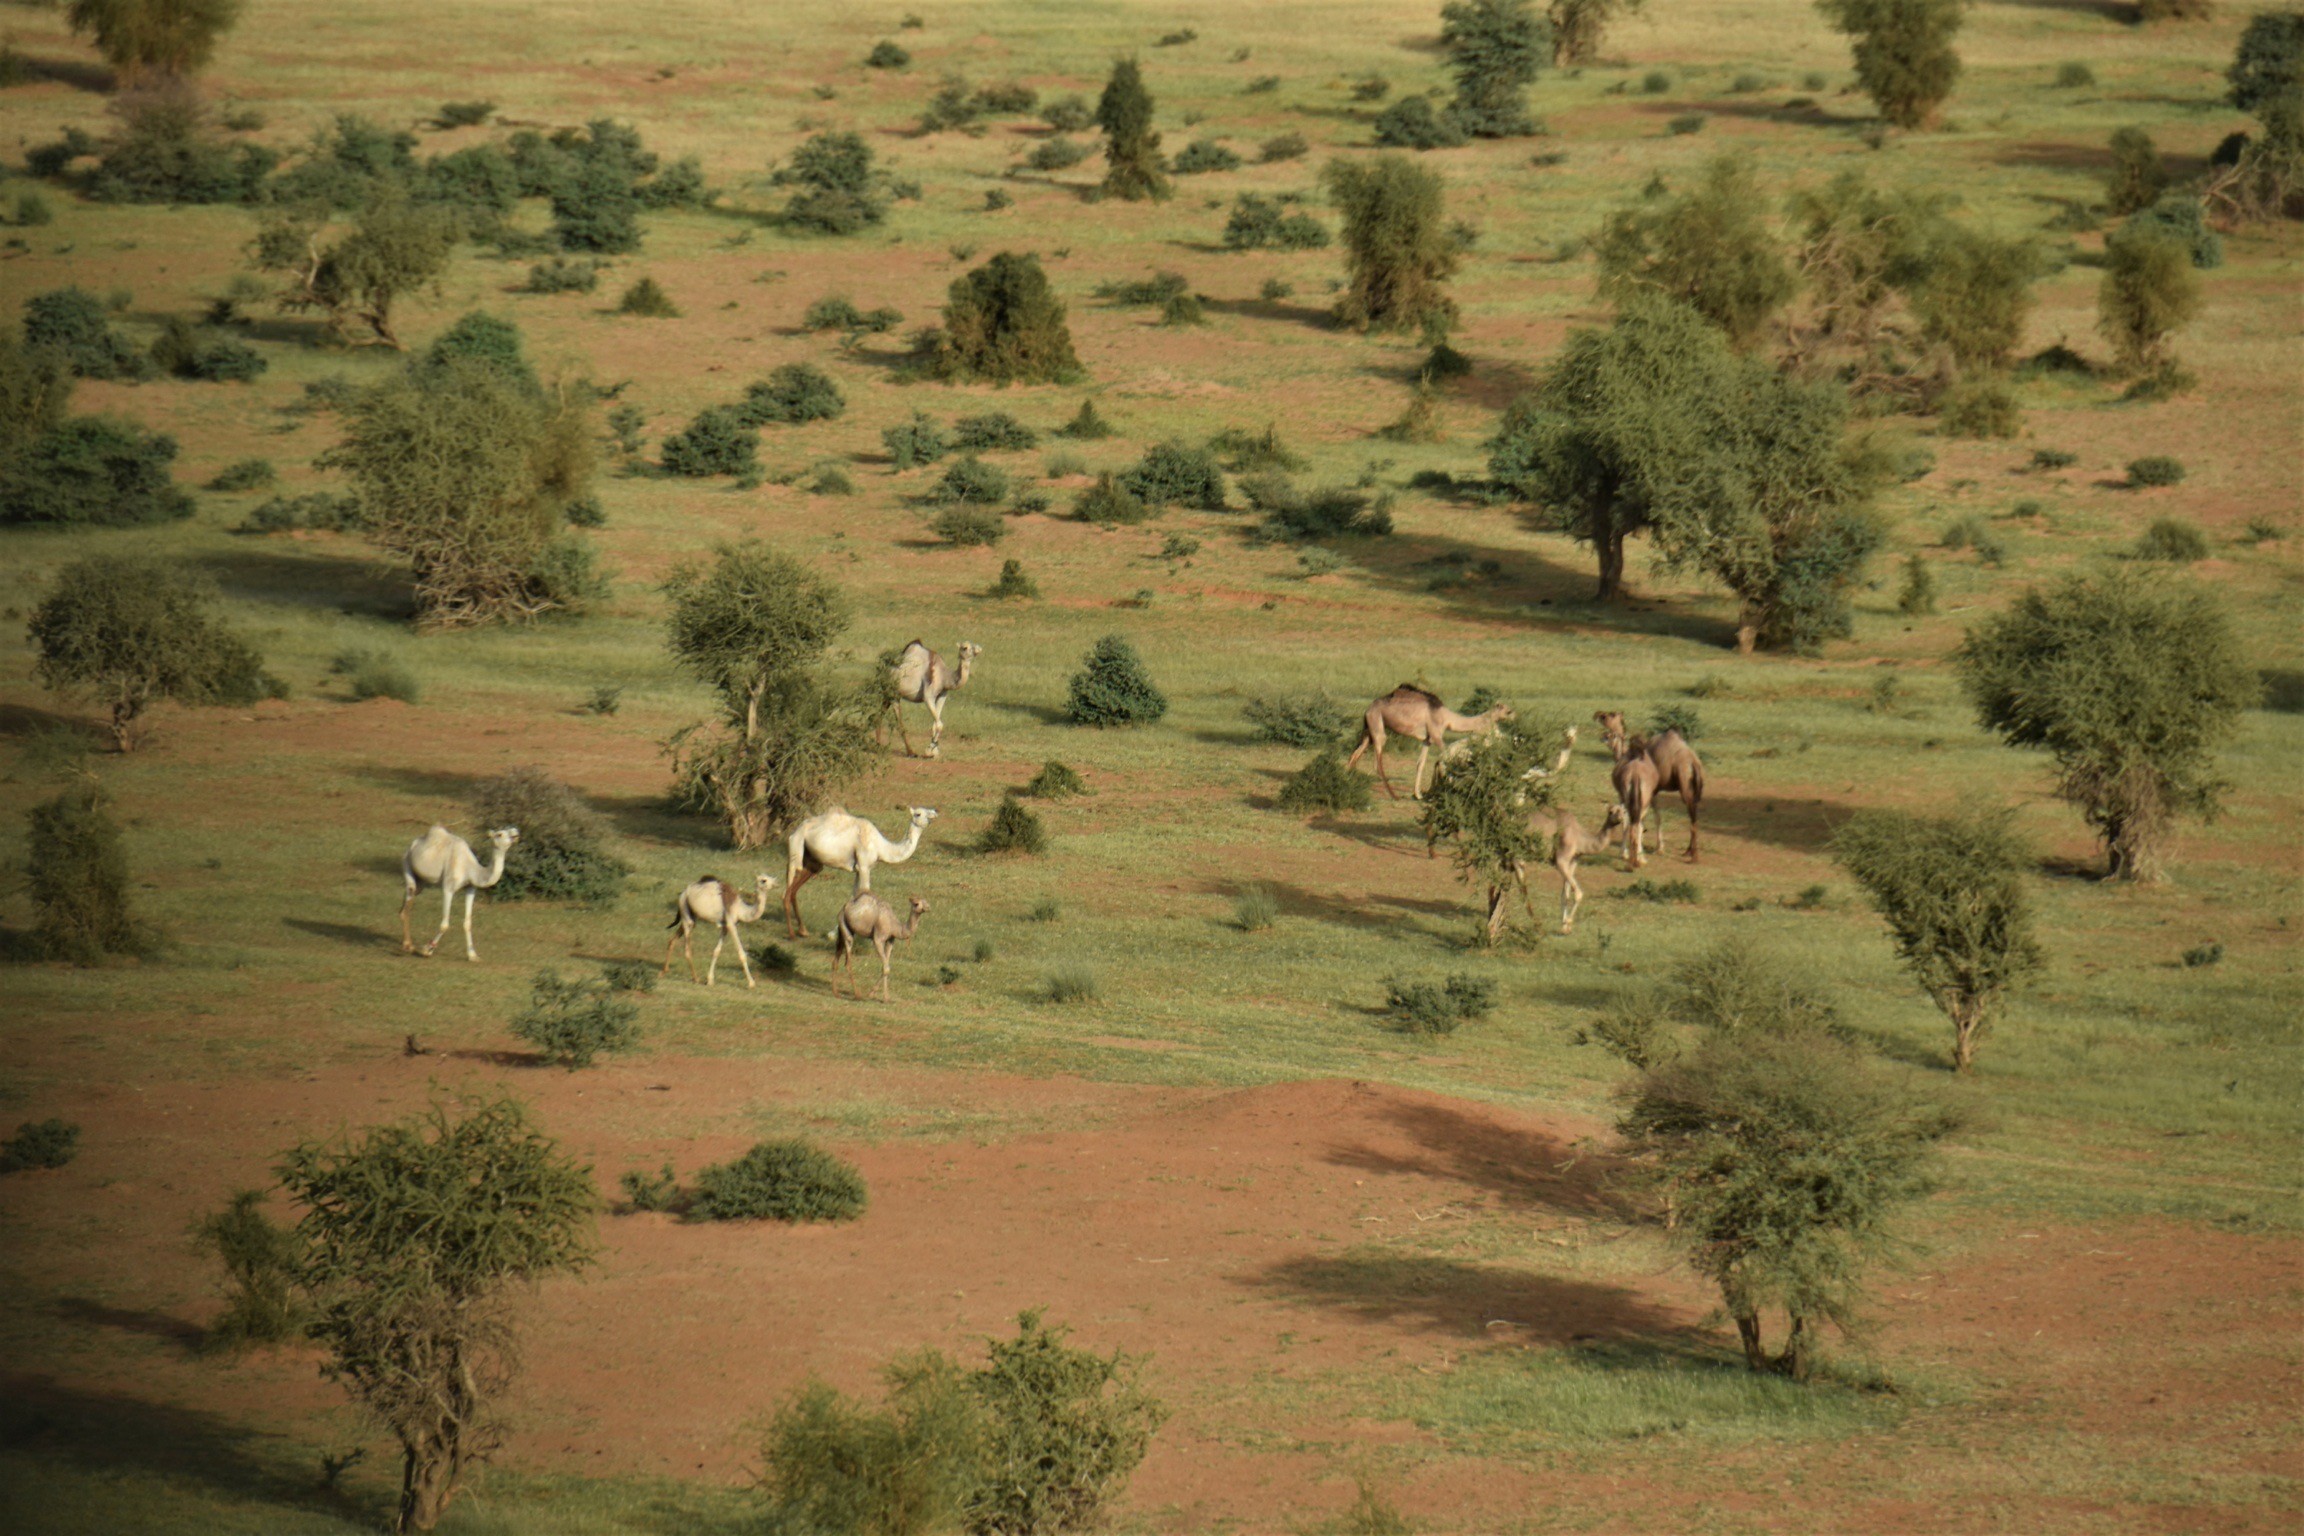 Camels roaming the Mali desert. 